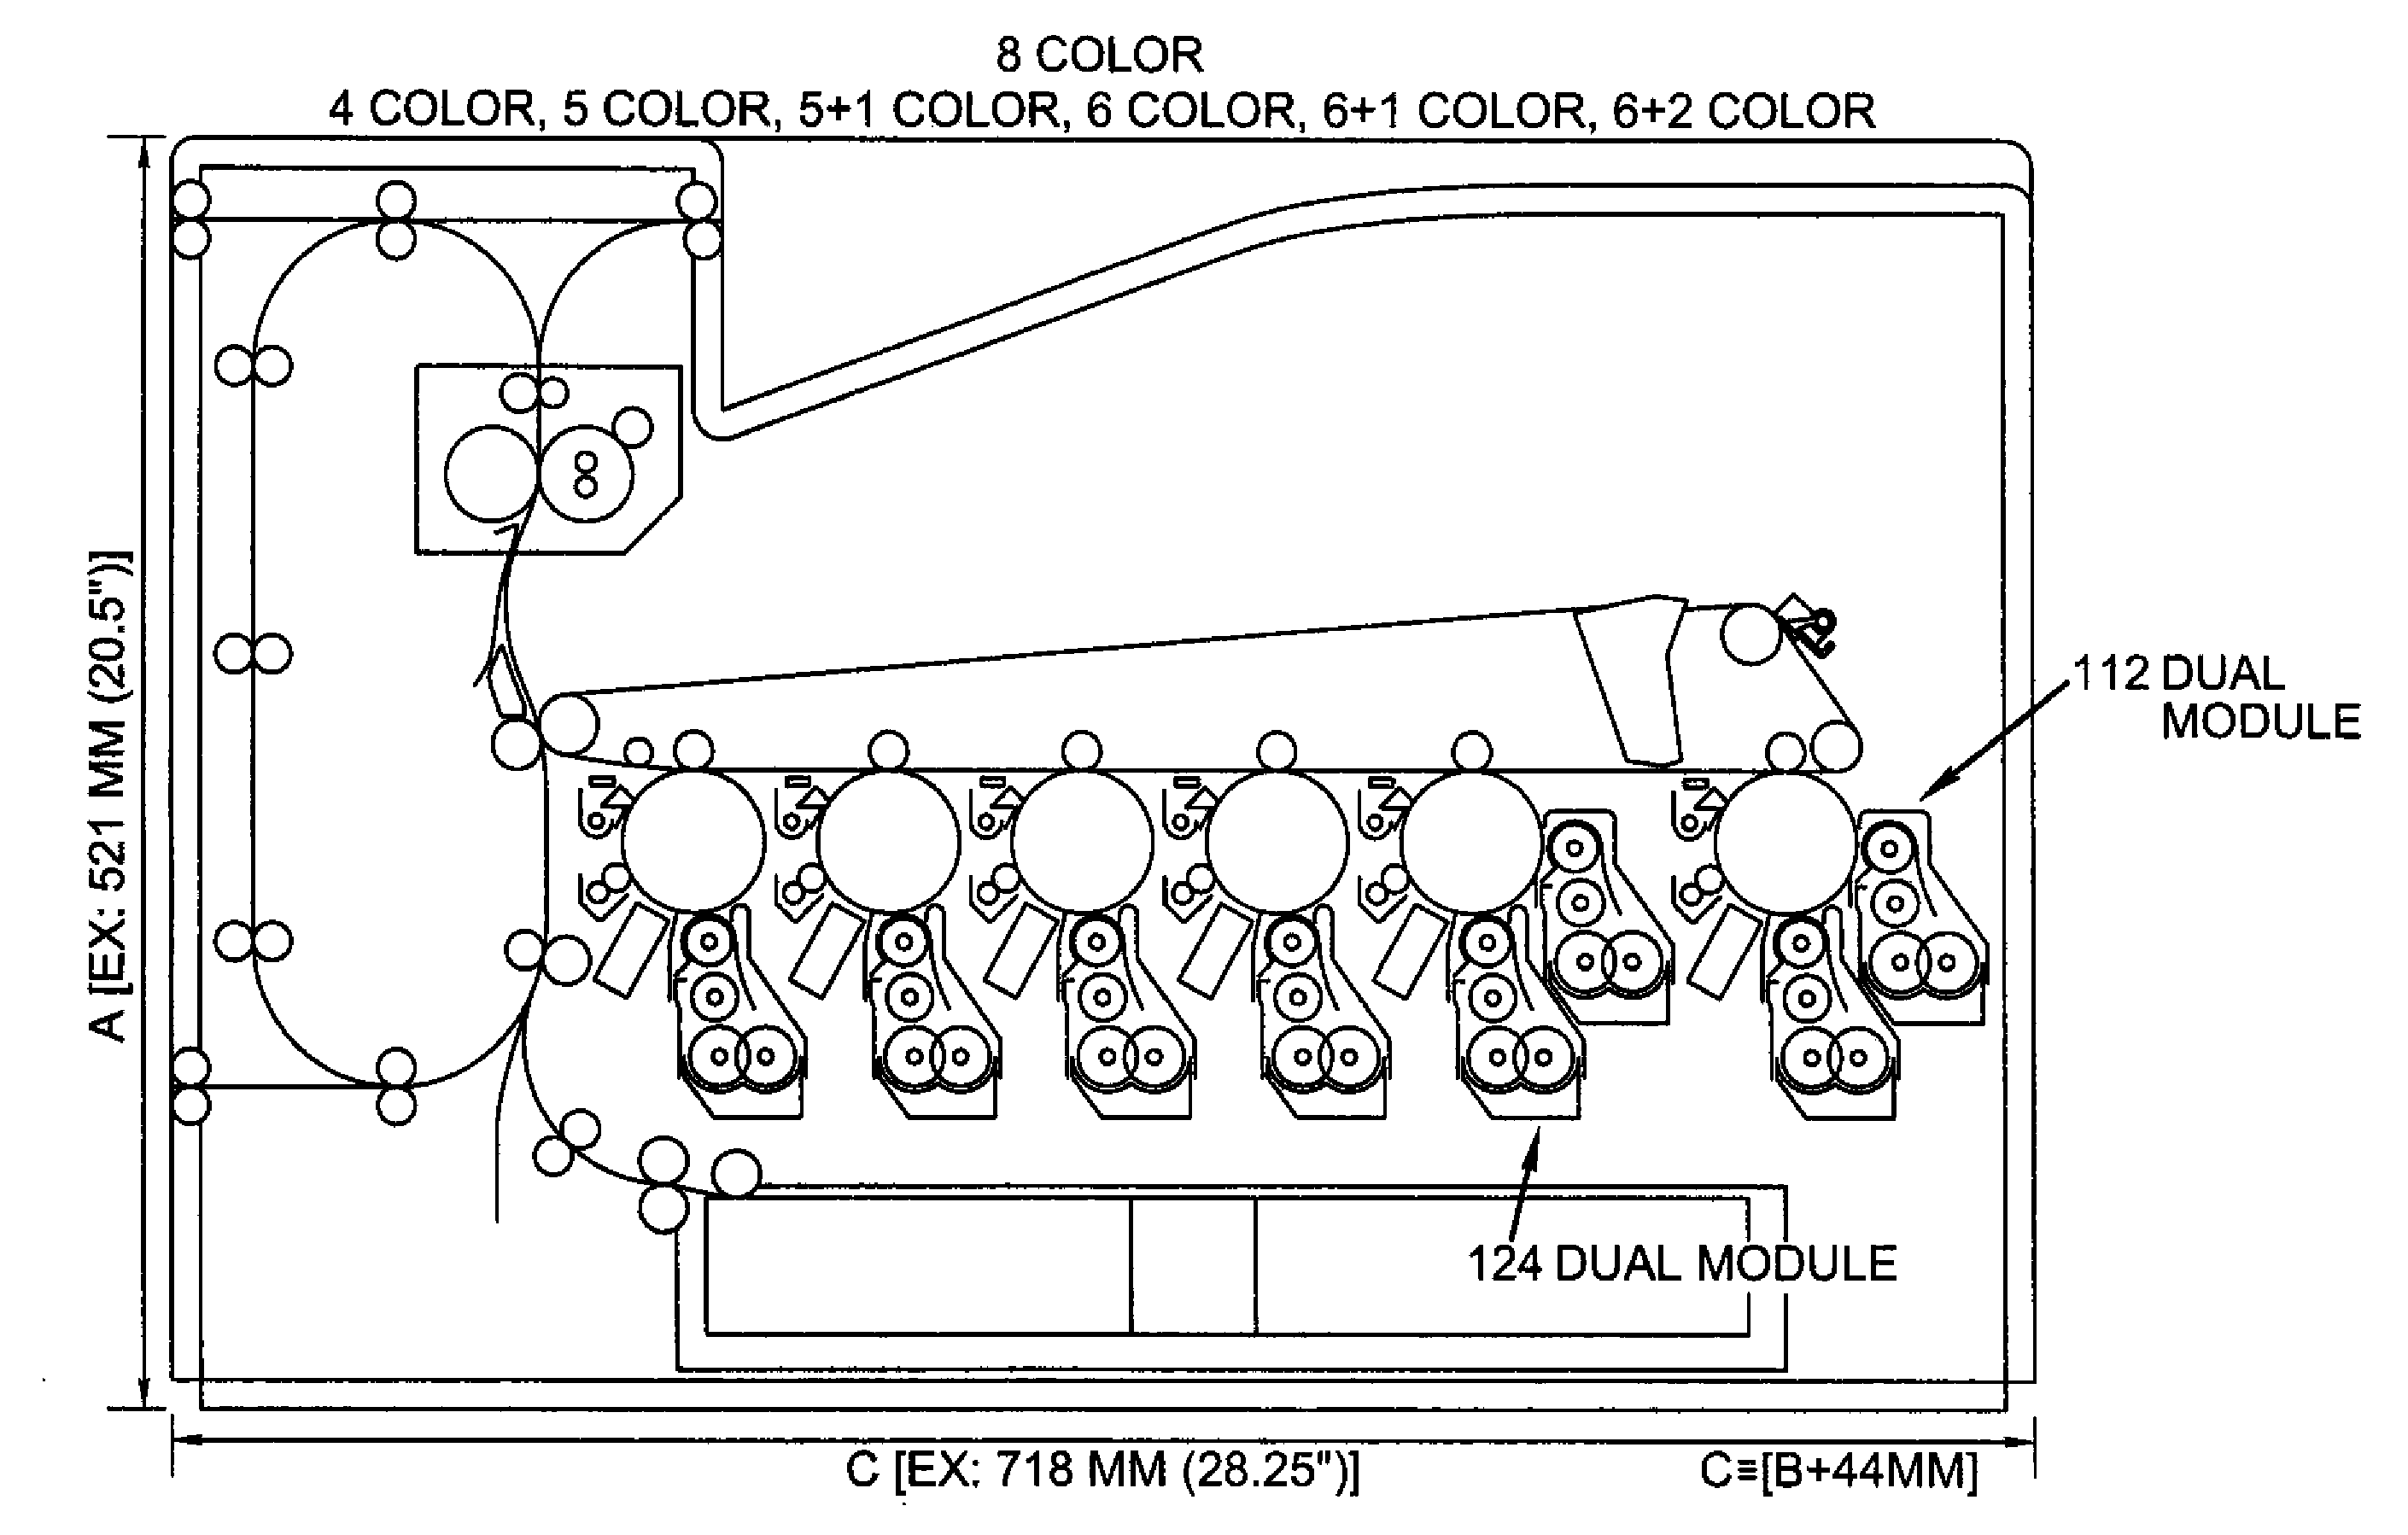 Error correction in a multicolor electrophotographic print engine